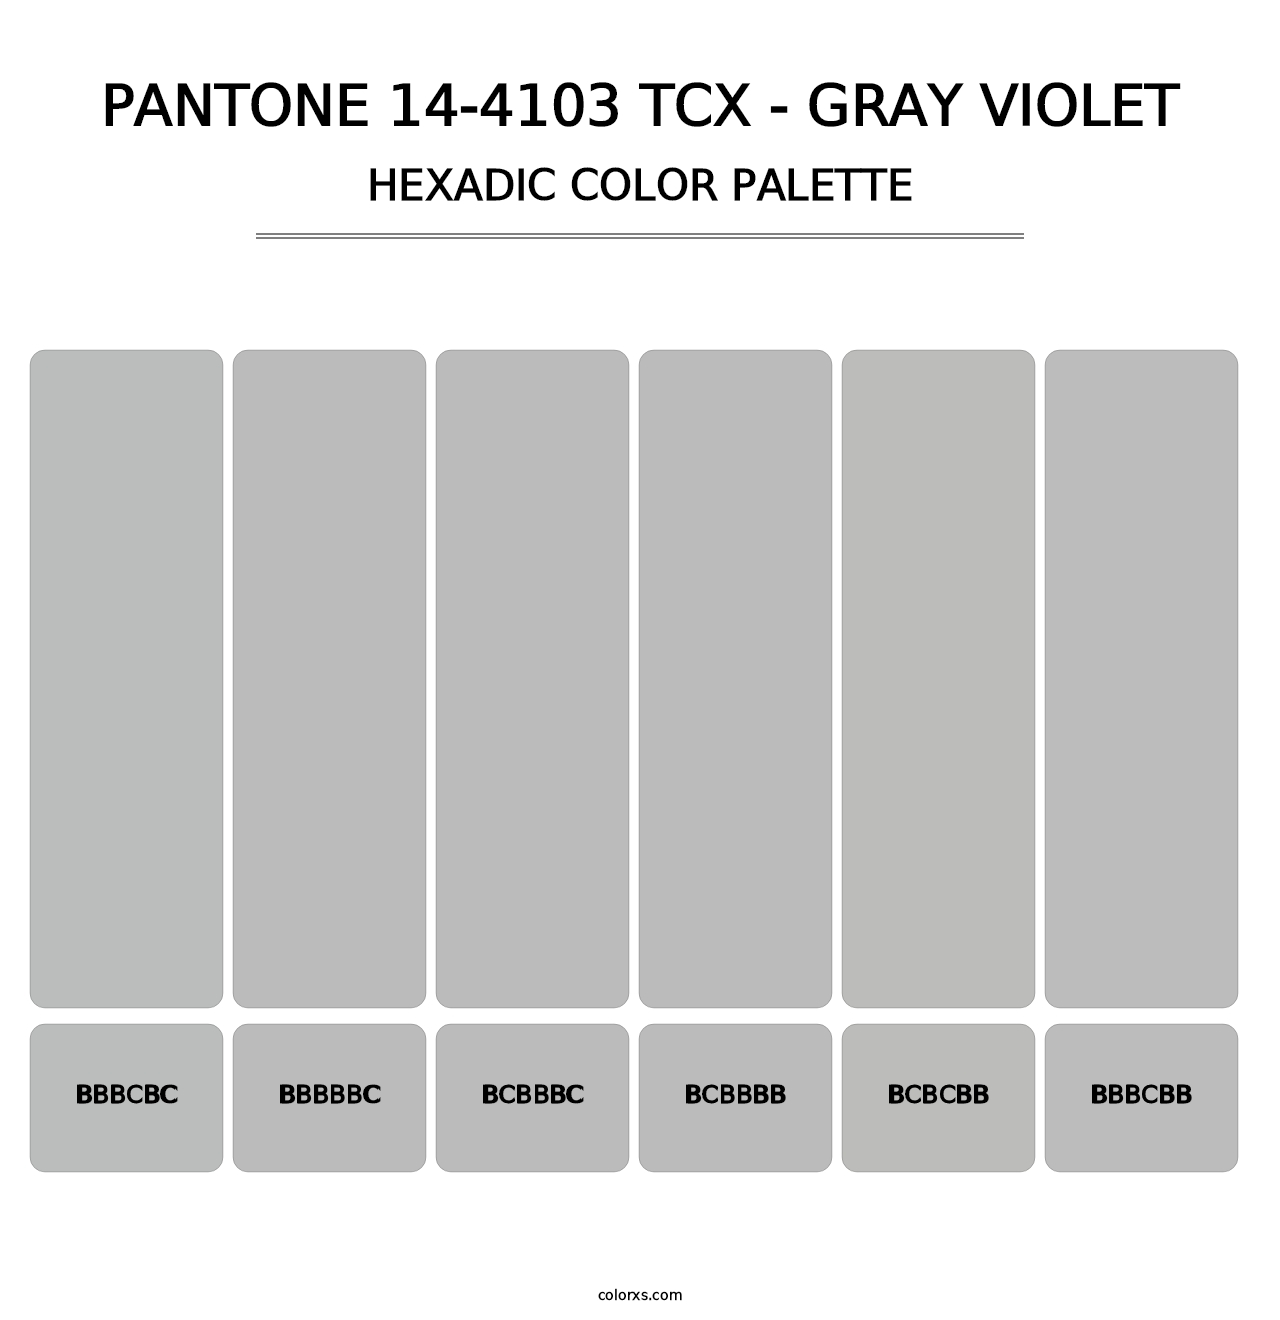 PANTONE 14-4103 TCX - Gray Violet - Hexadic Color Palette